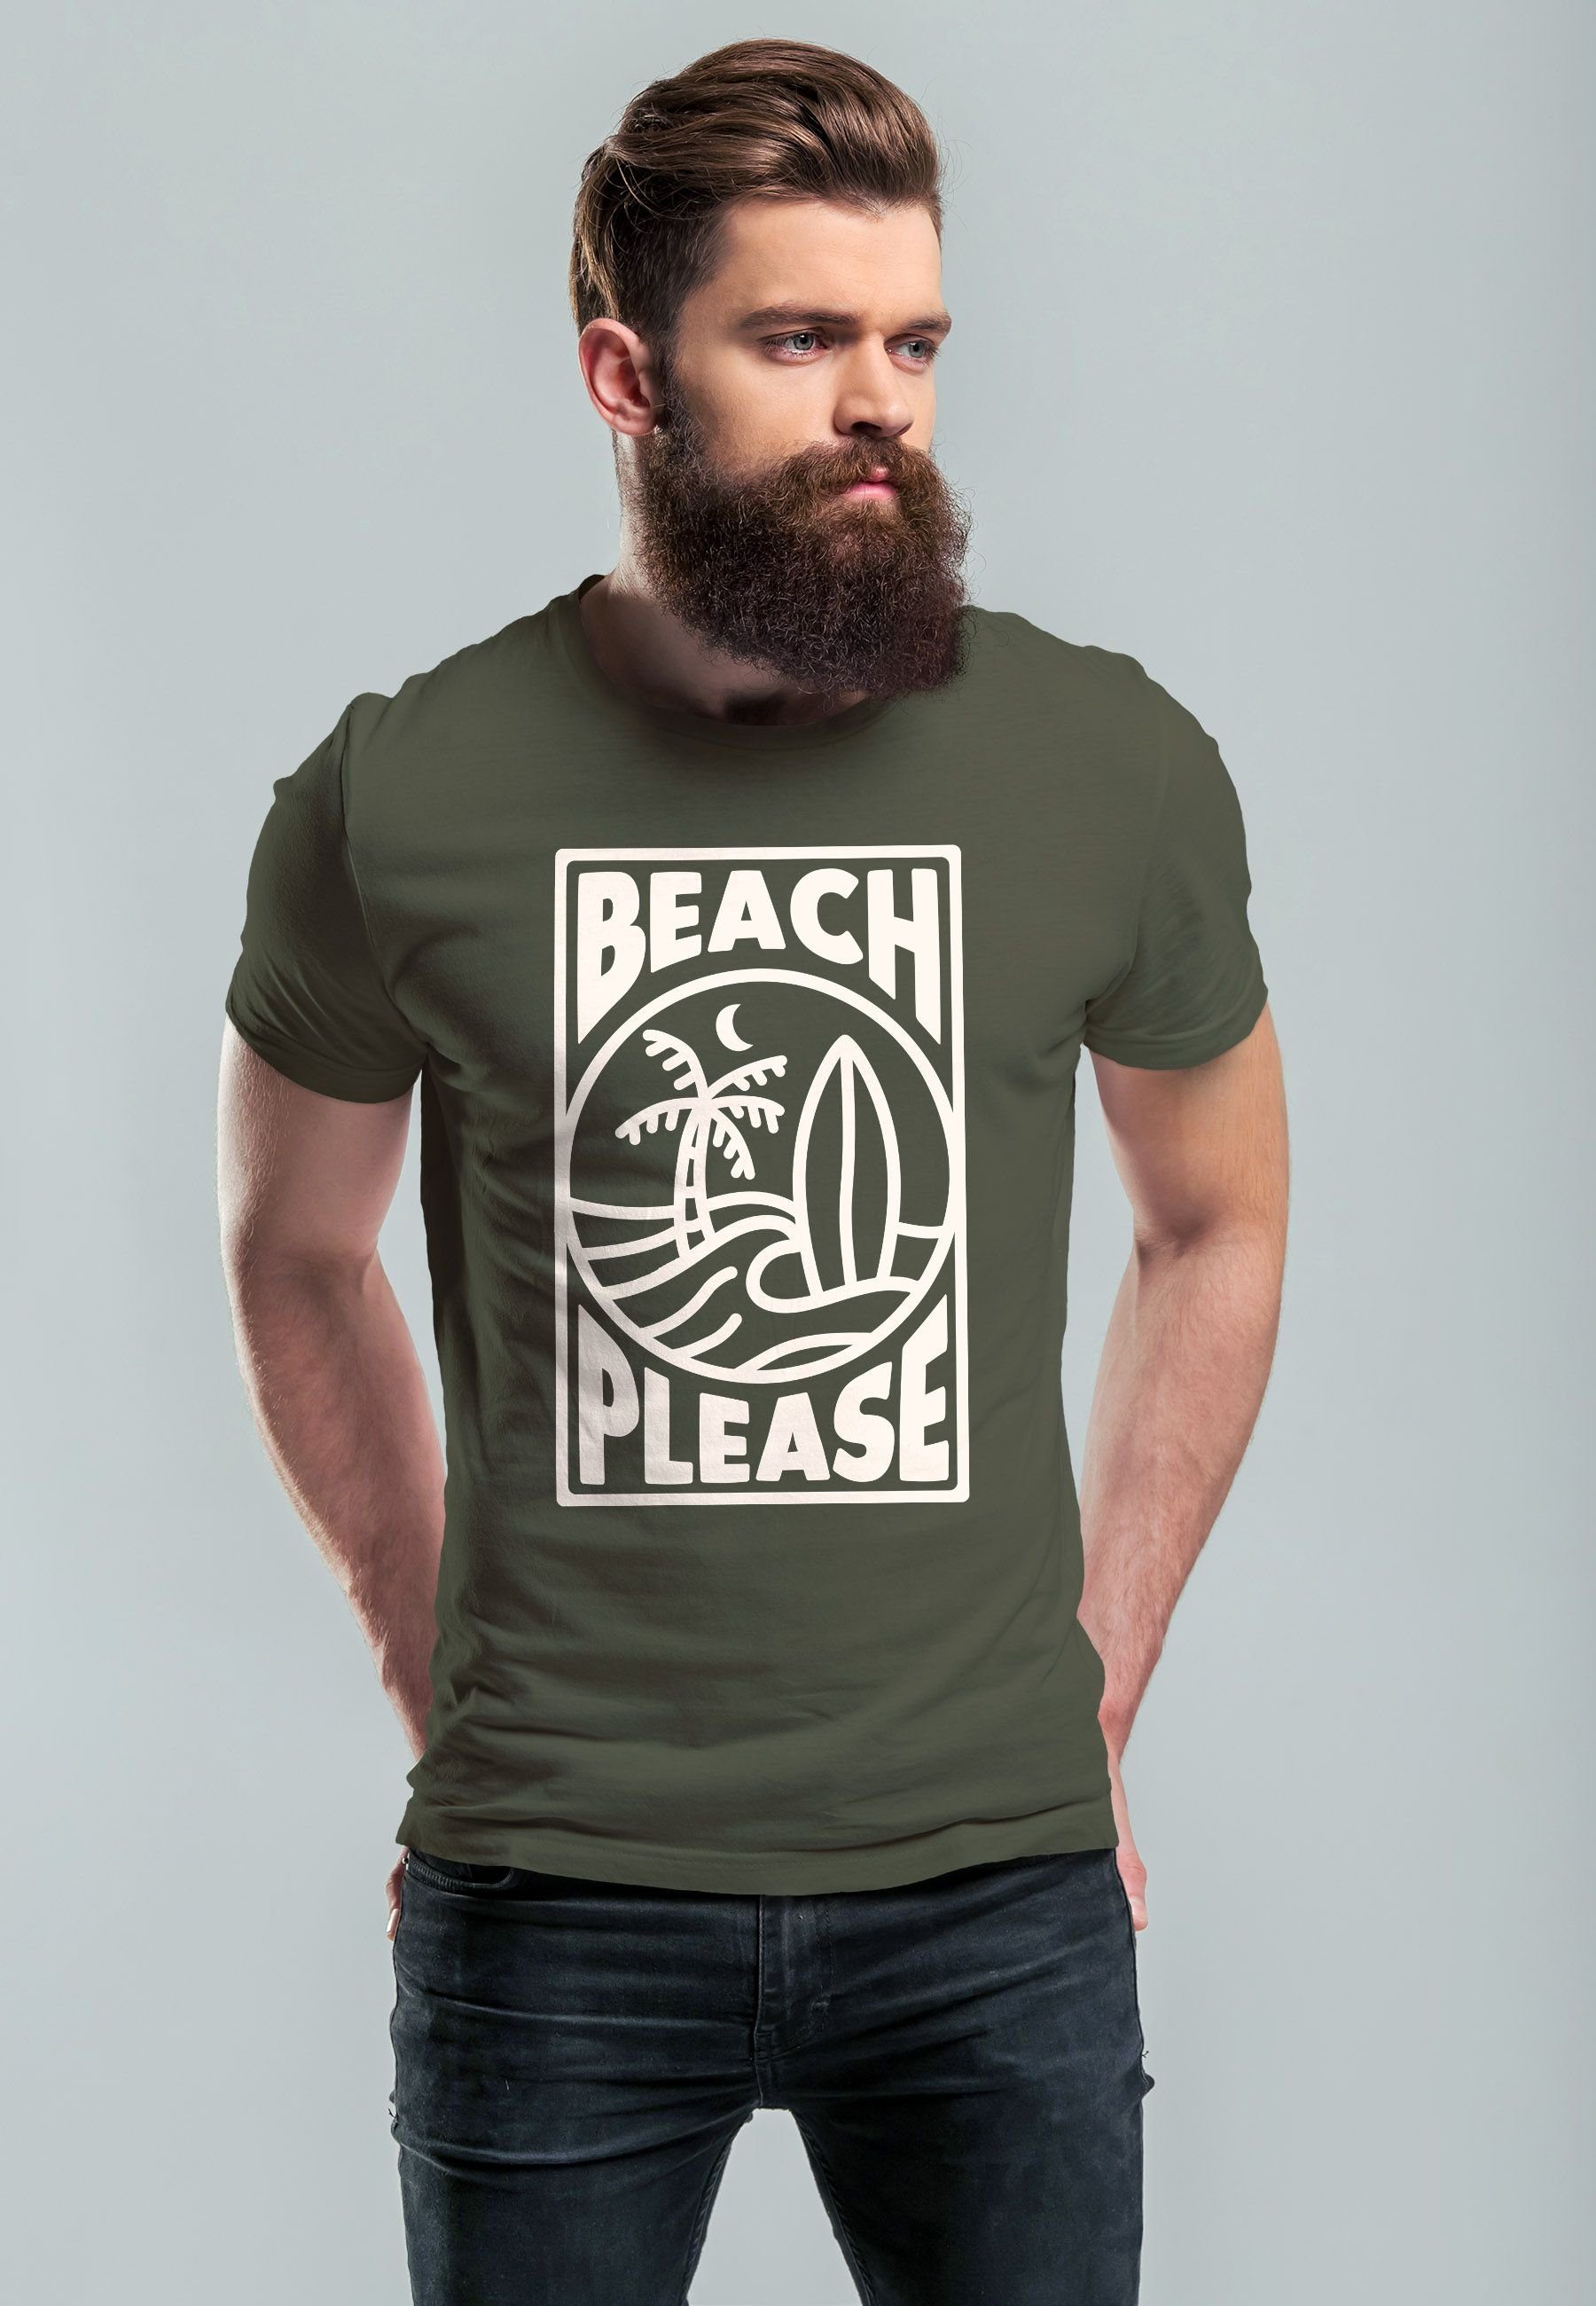 mit Print T-Shirt Please Wave Print-Shirt Surfboard Welle Beach Sommer Surfing Neverless Print Herren army